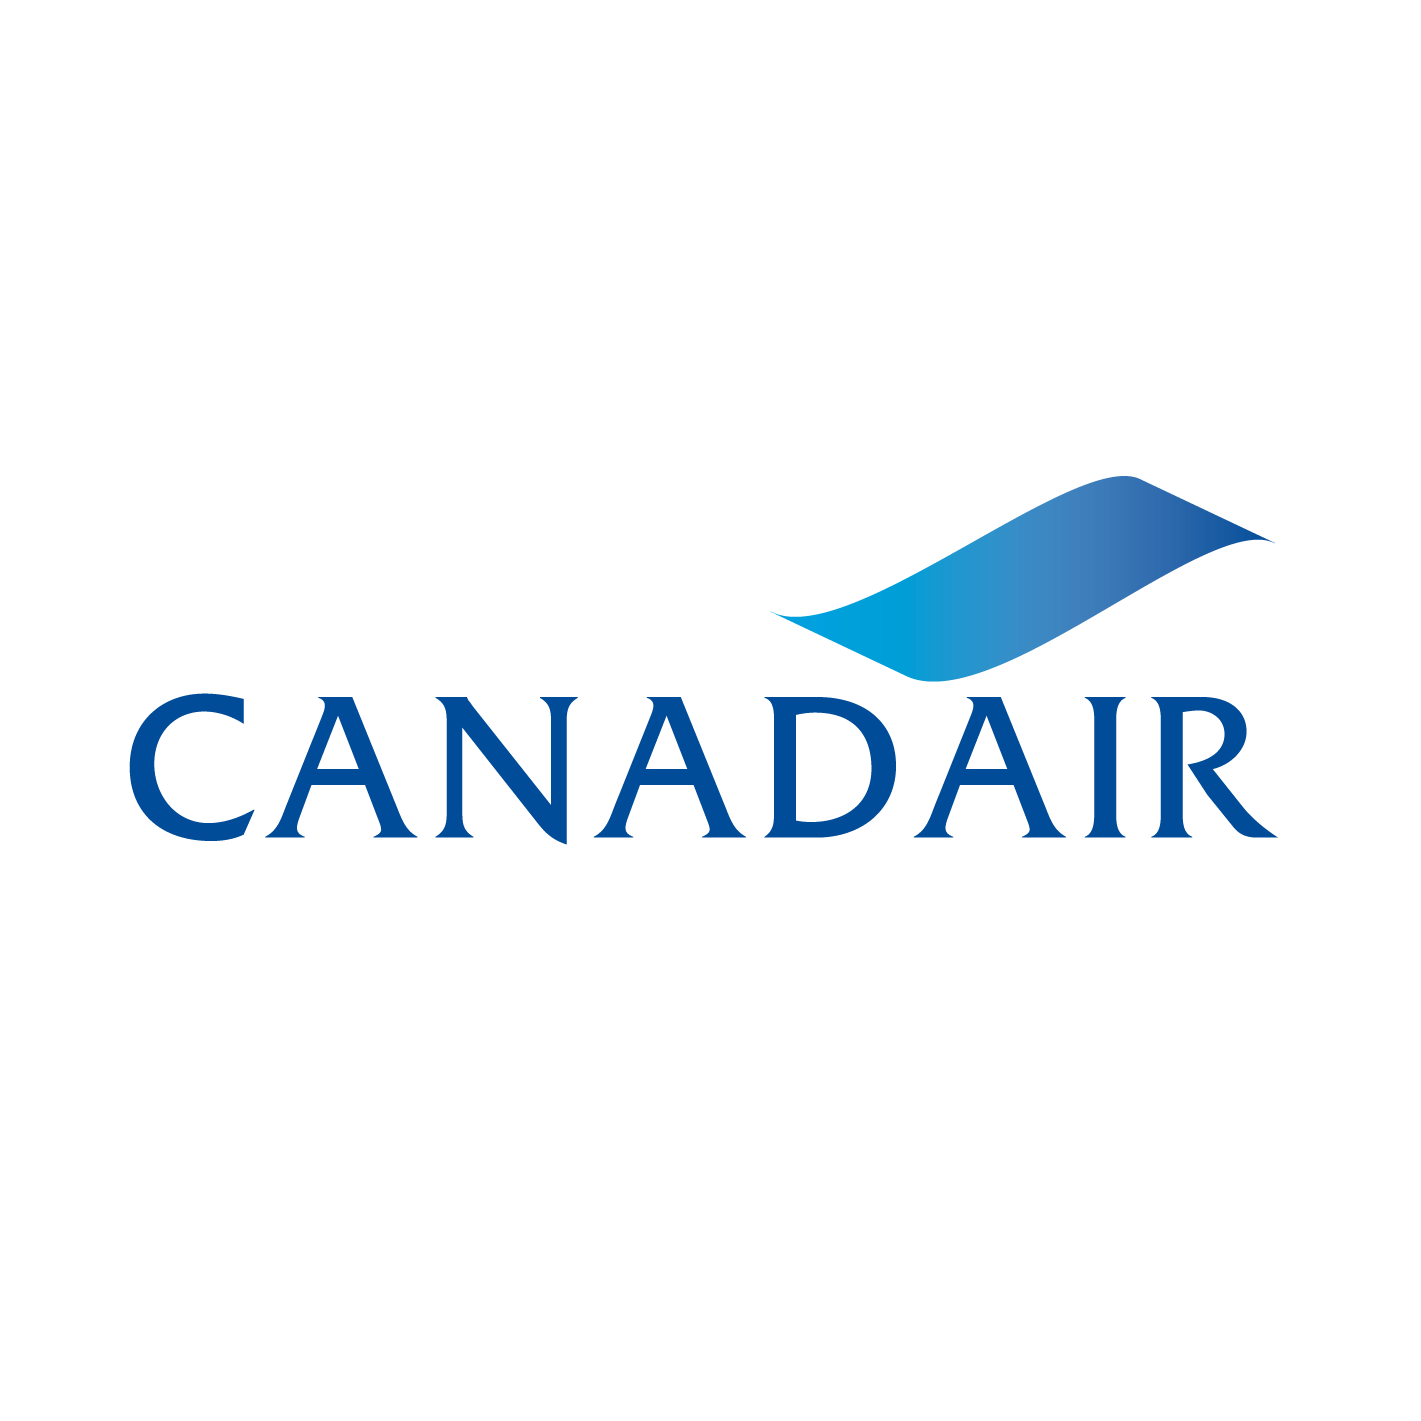 Canadair Logo - LogoDix